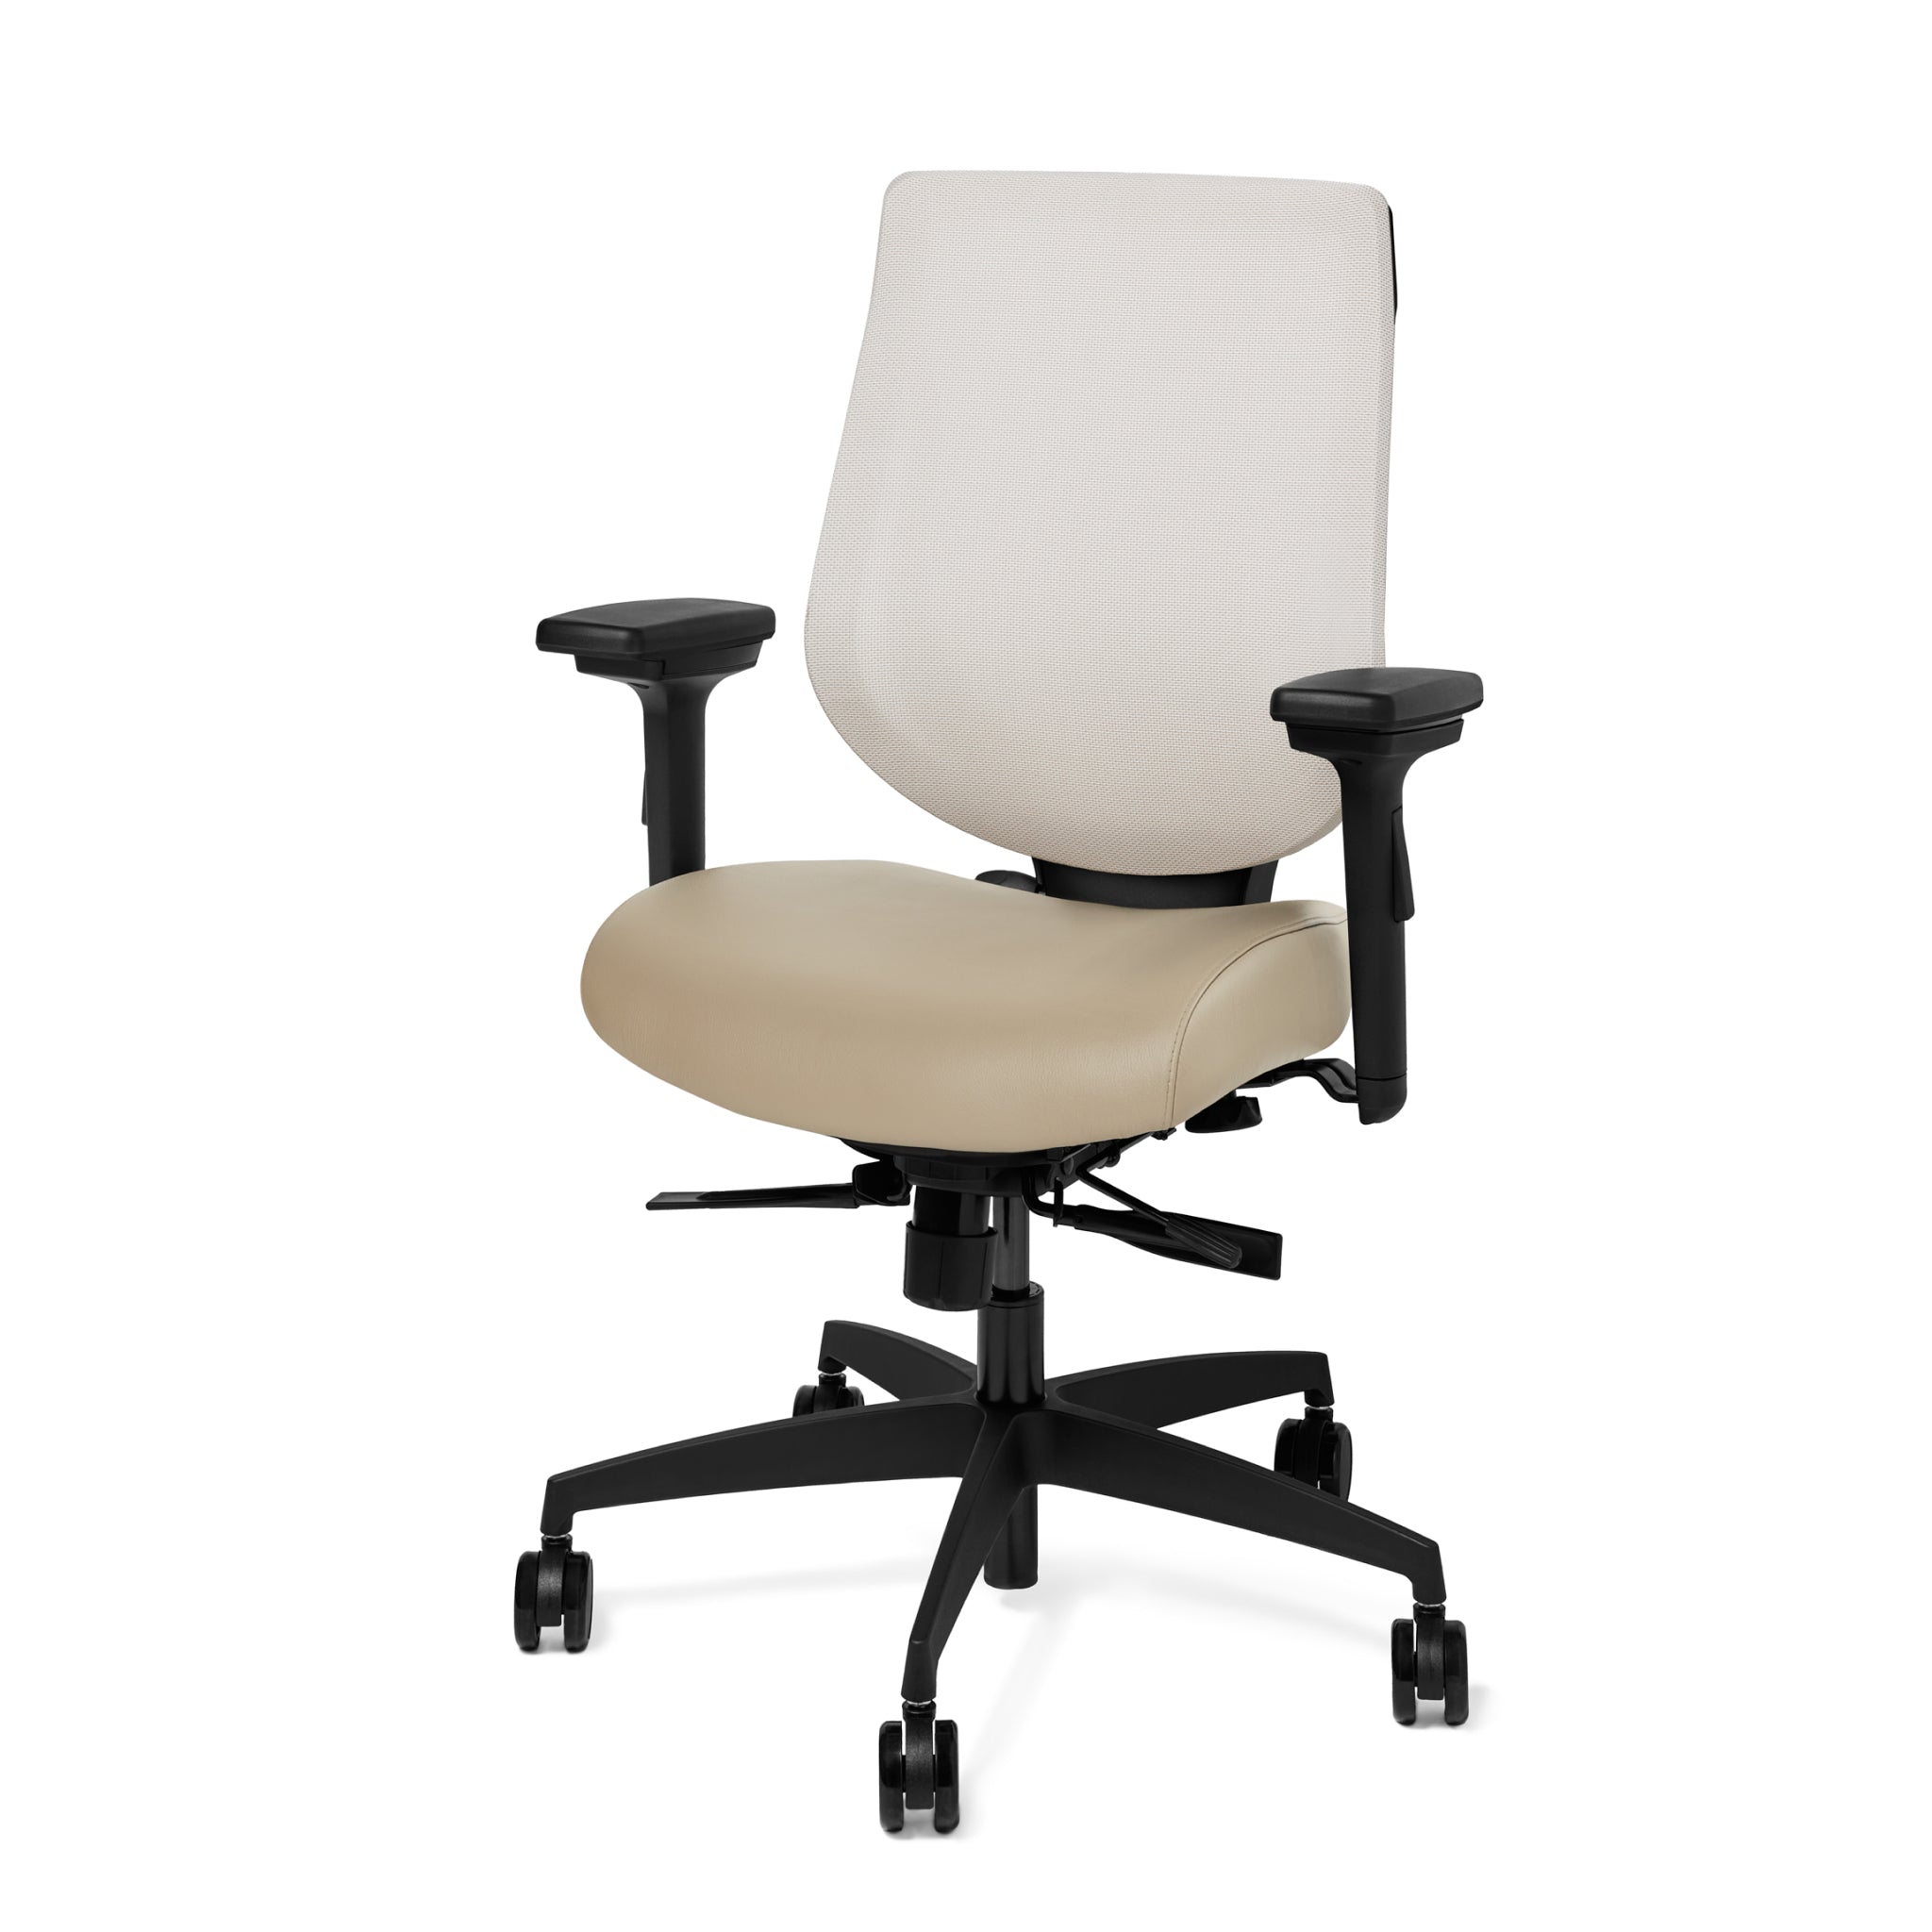  Small YouToo Ergonomic Chair - Black/Cream – Beige - Noir/Cream – Beige